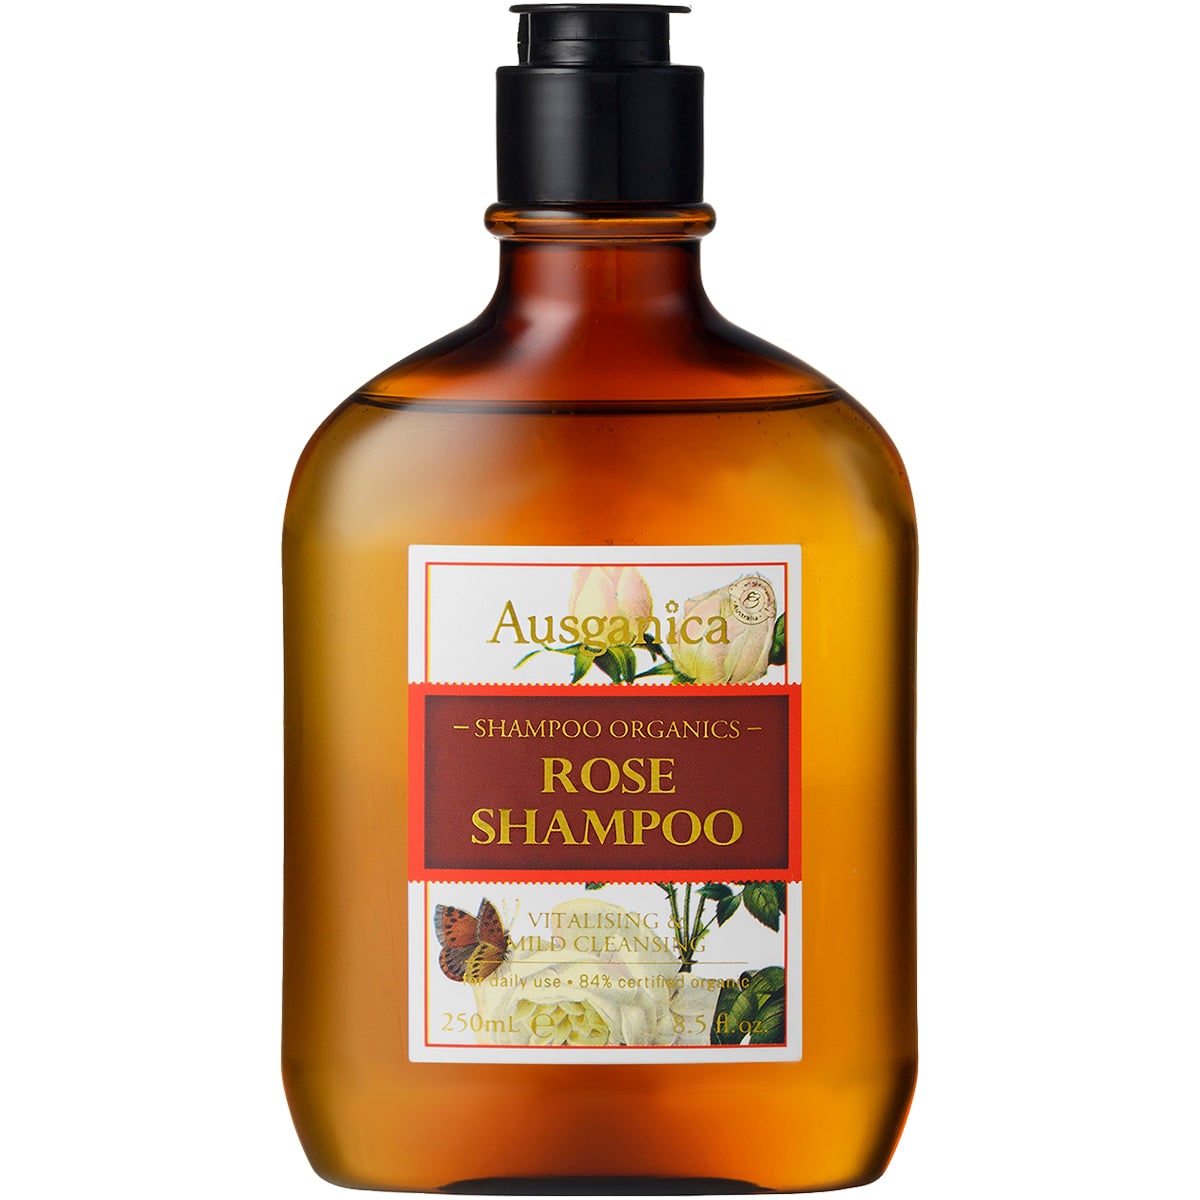 Ausganica Rose Romance Rose Shampoo 250ml